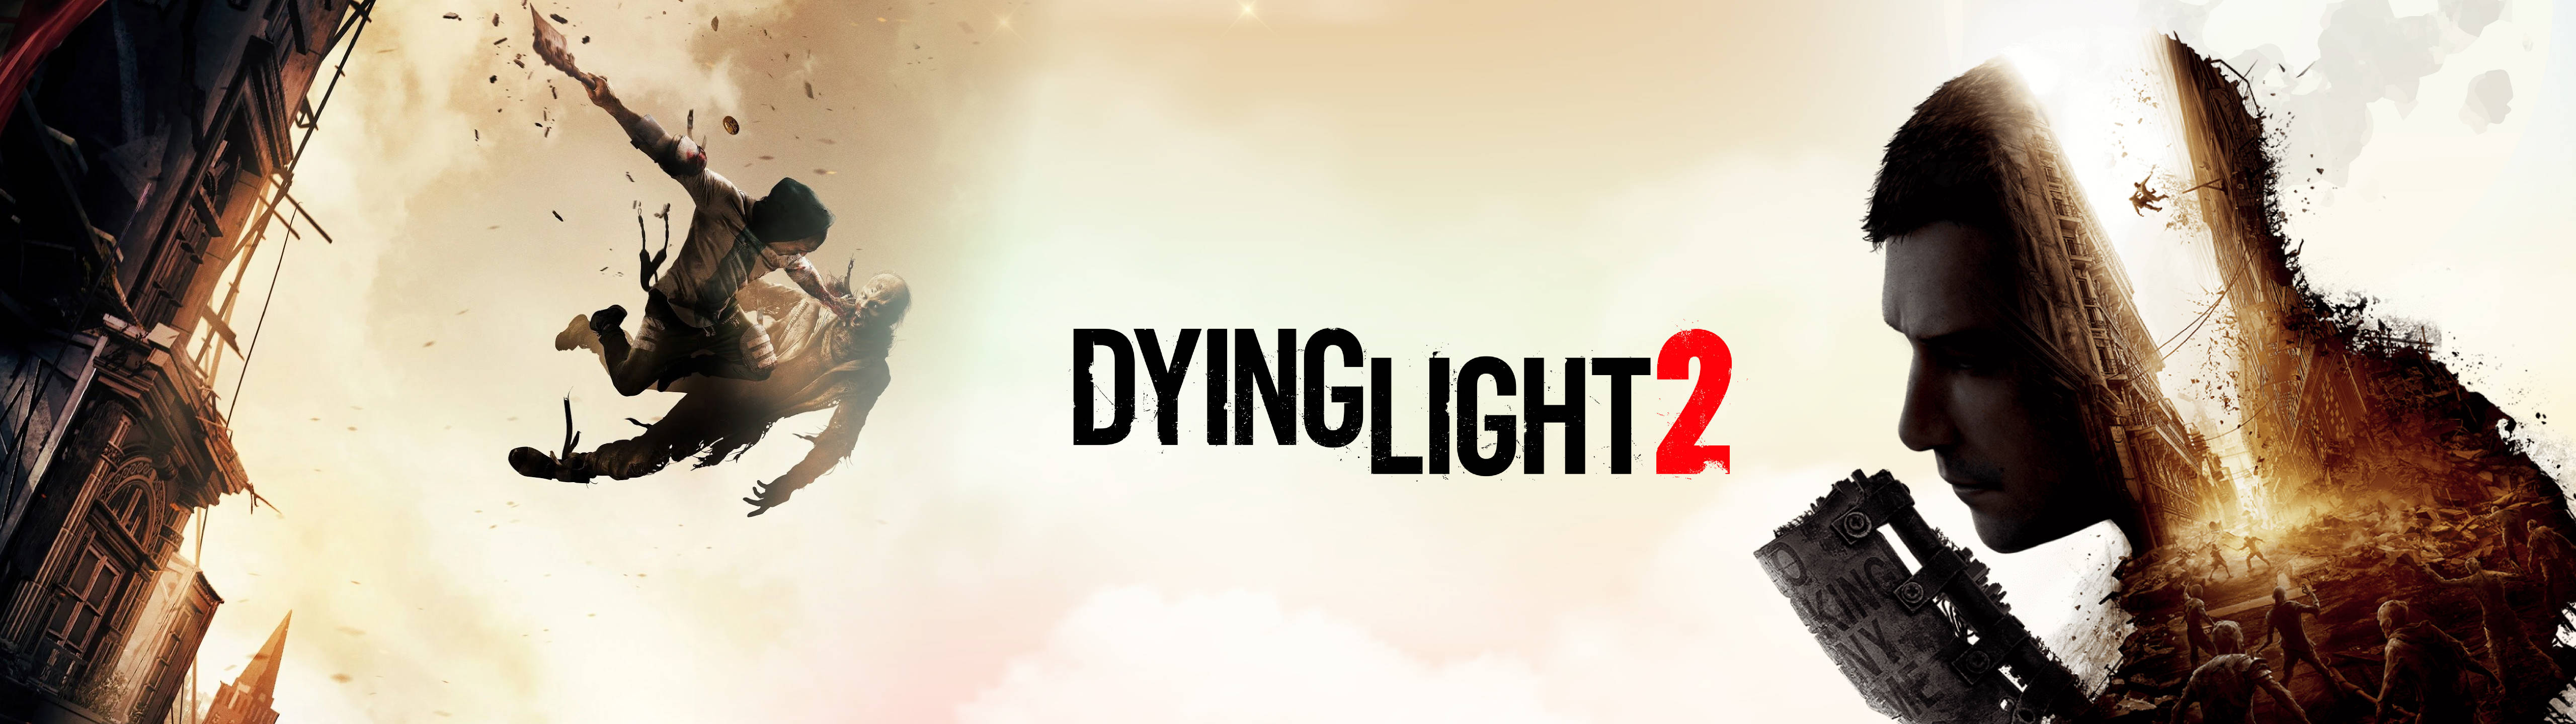 Dying Light 2 5120x1440 Gaming